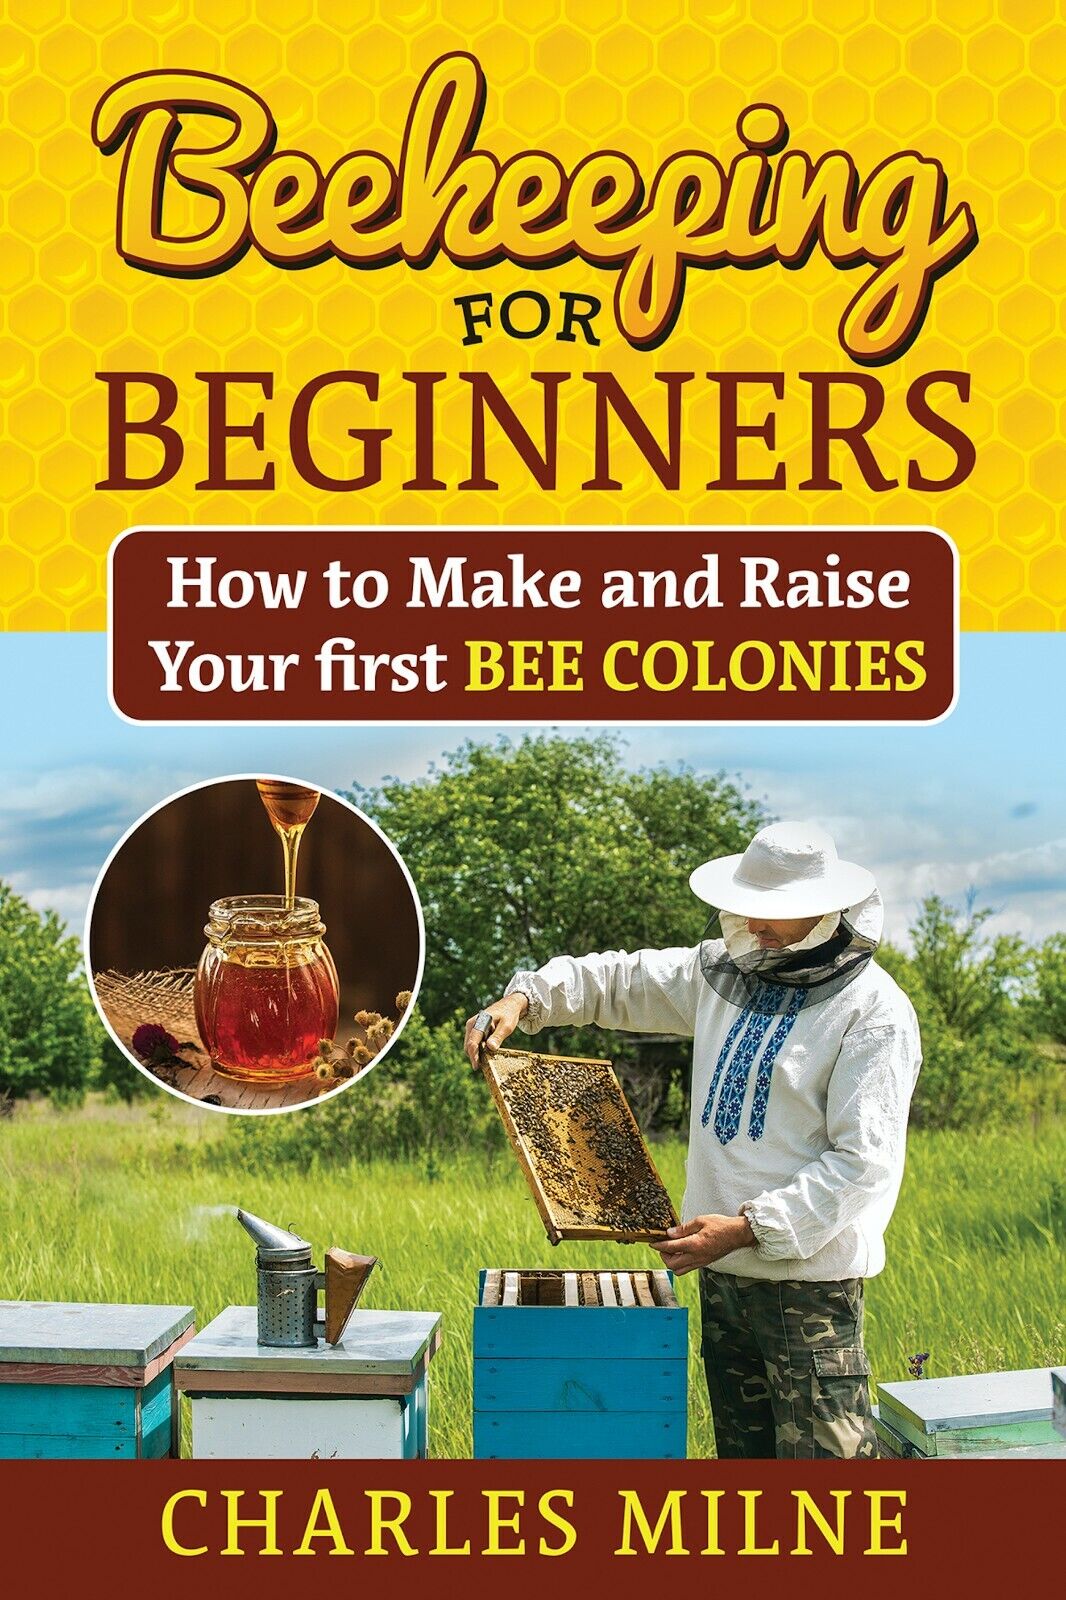 Beekeeping for beginners di Charles Milne,  2021,  Youcanprint libro usato